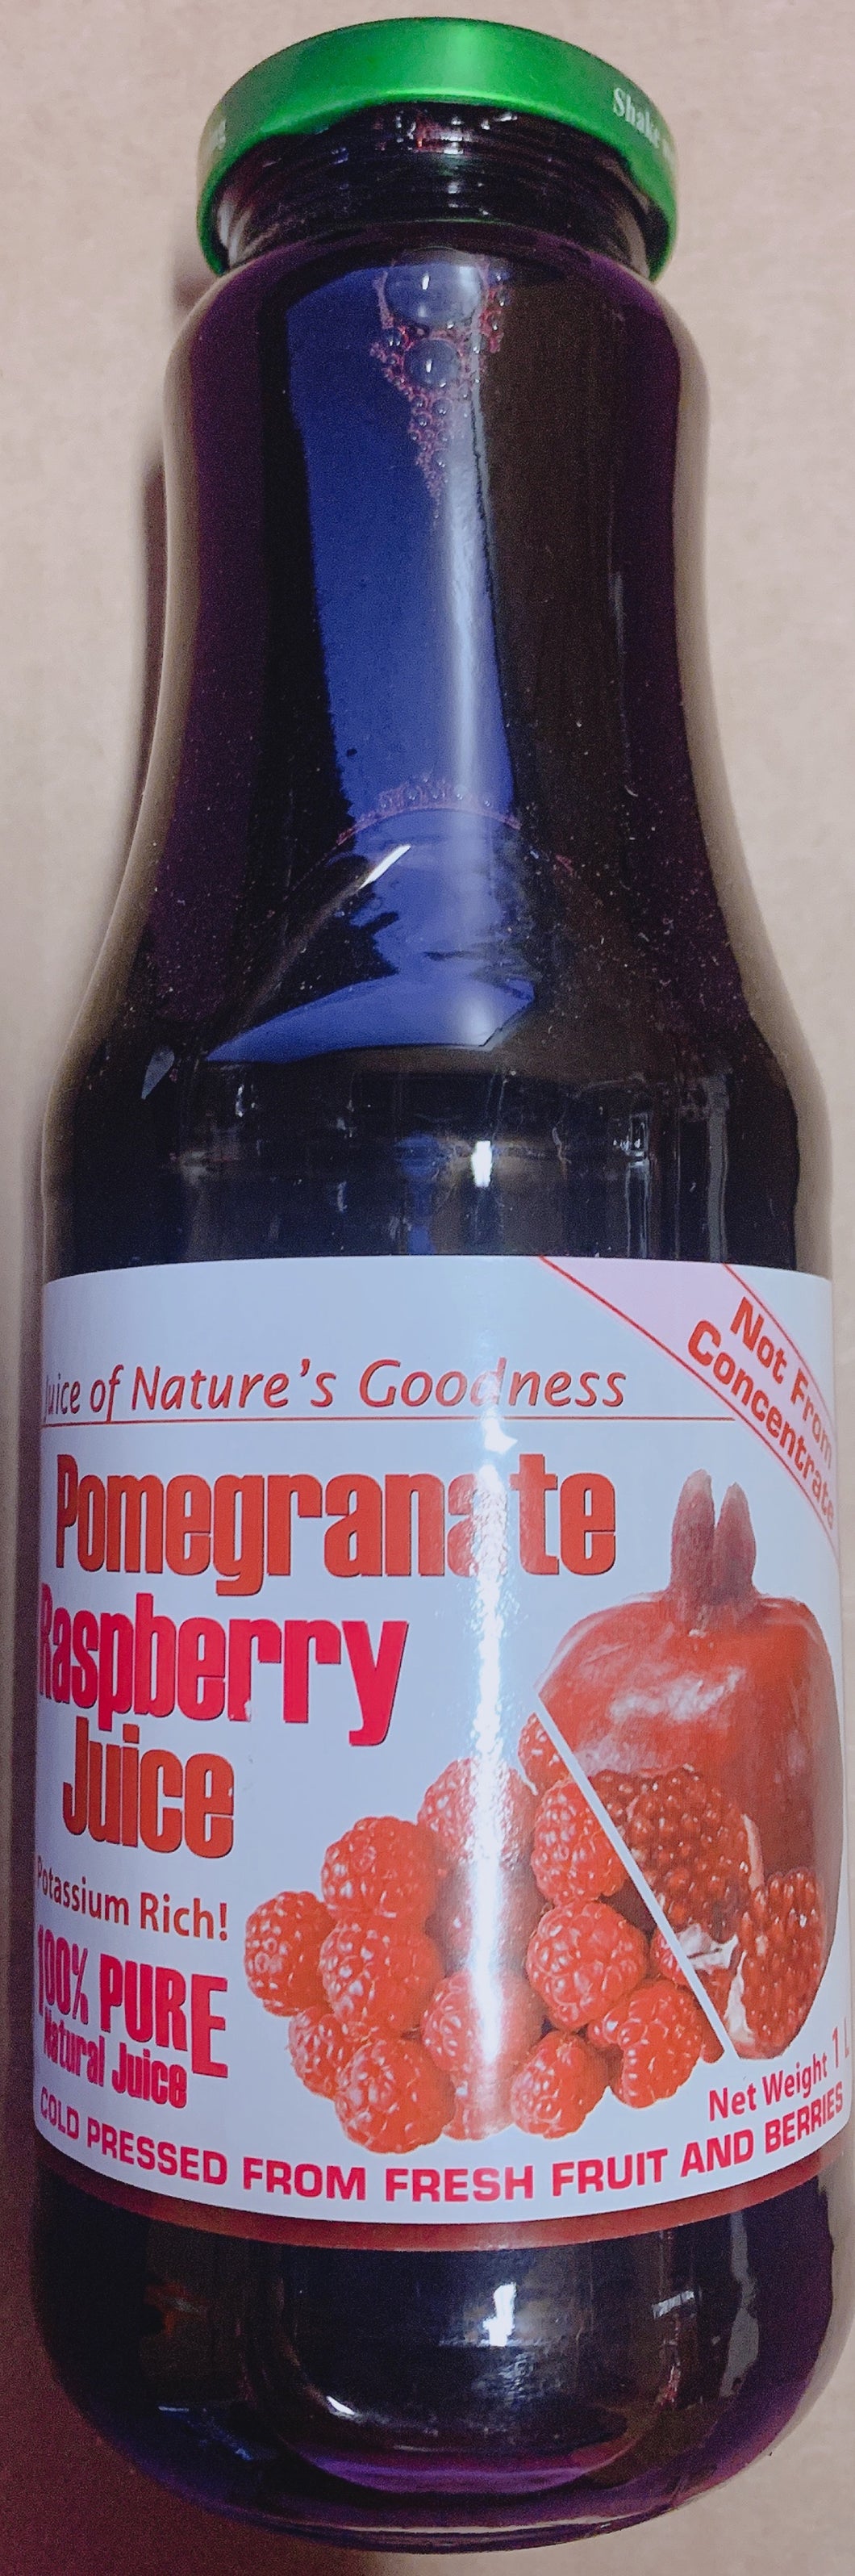 Nature's Goodness Pomegranate Raspberry Juice